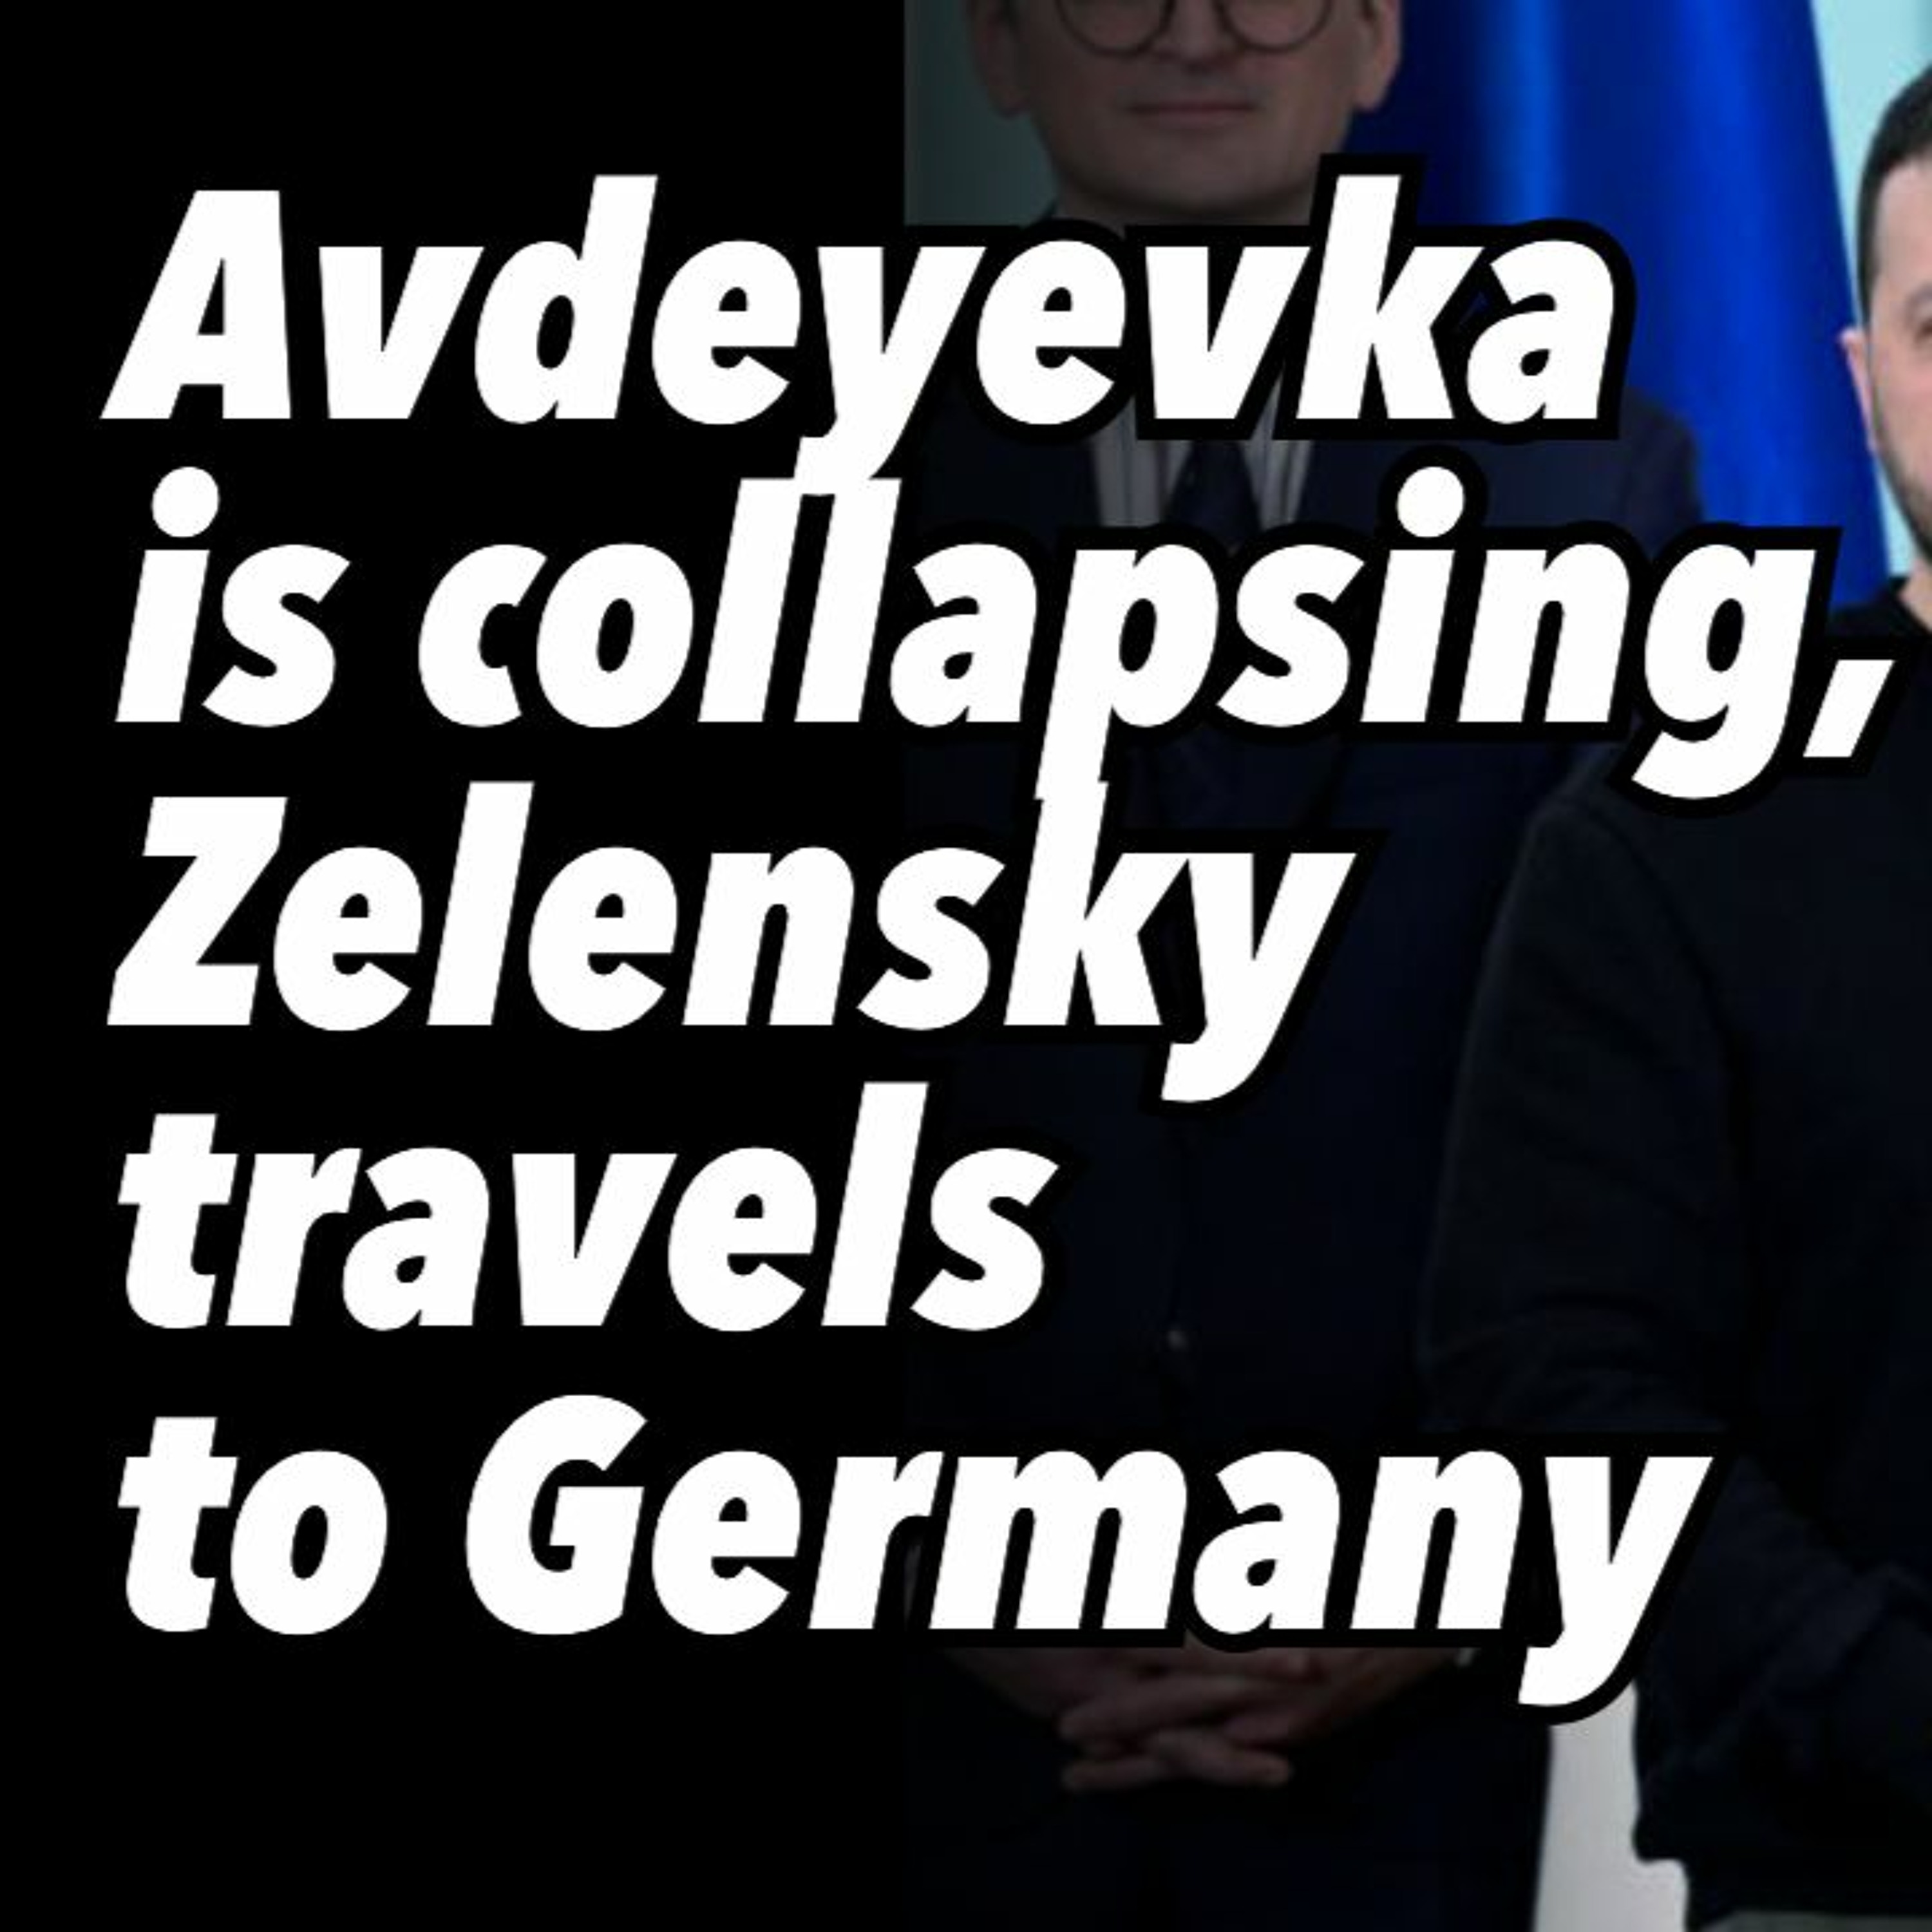 Avdeyevka is collapsing, Zelensky travels to Germany